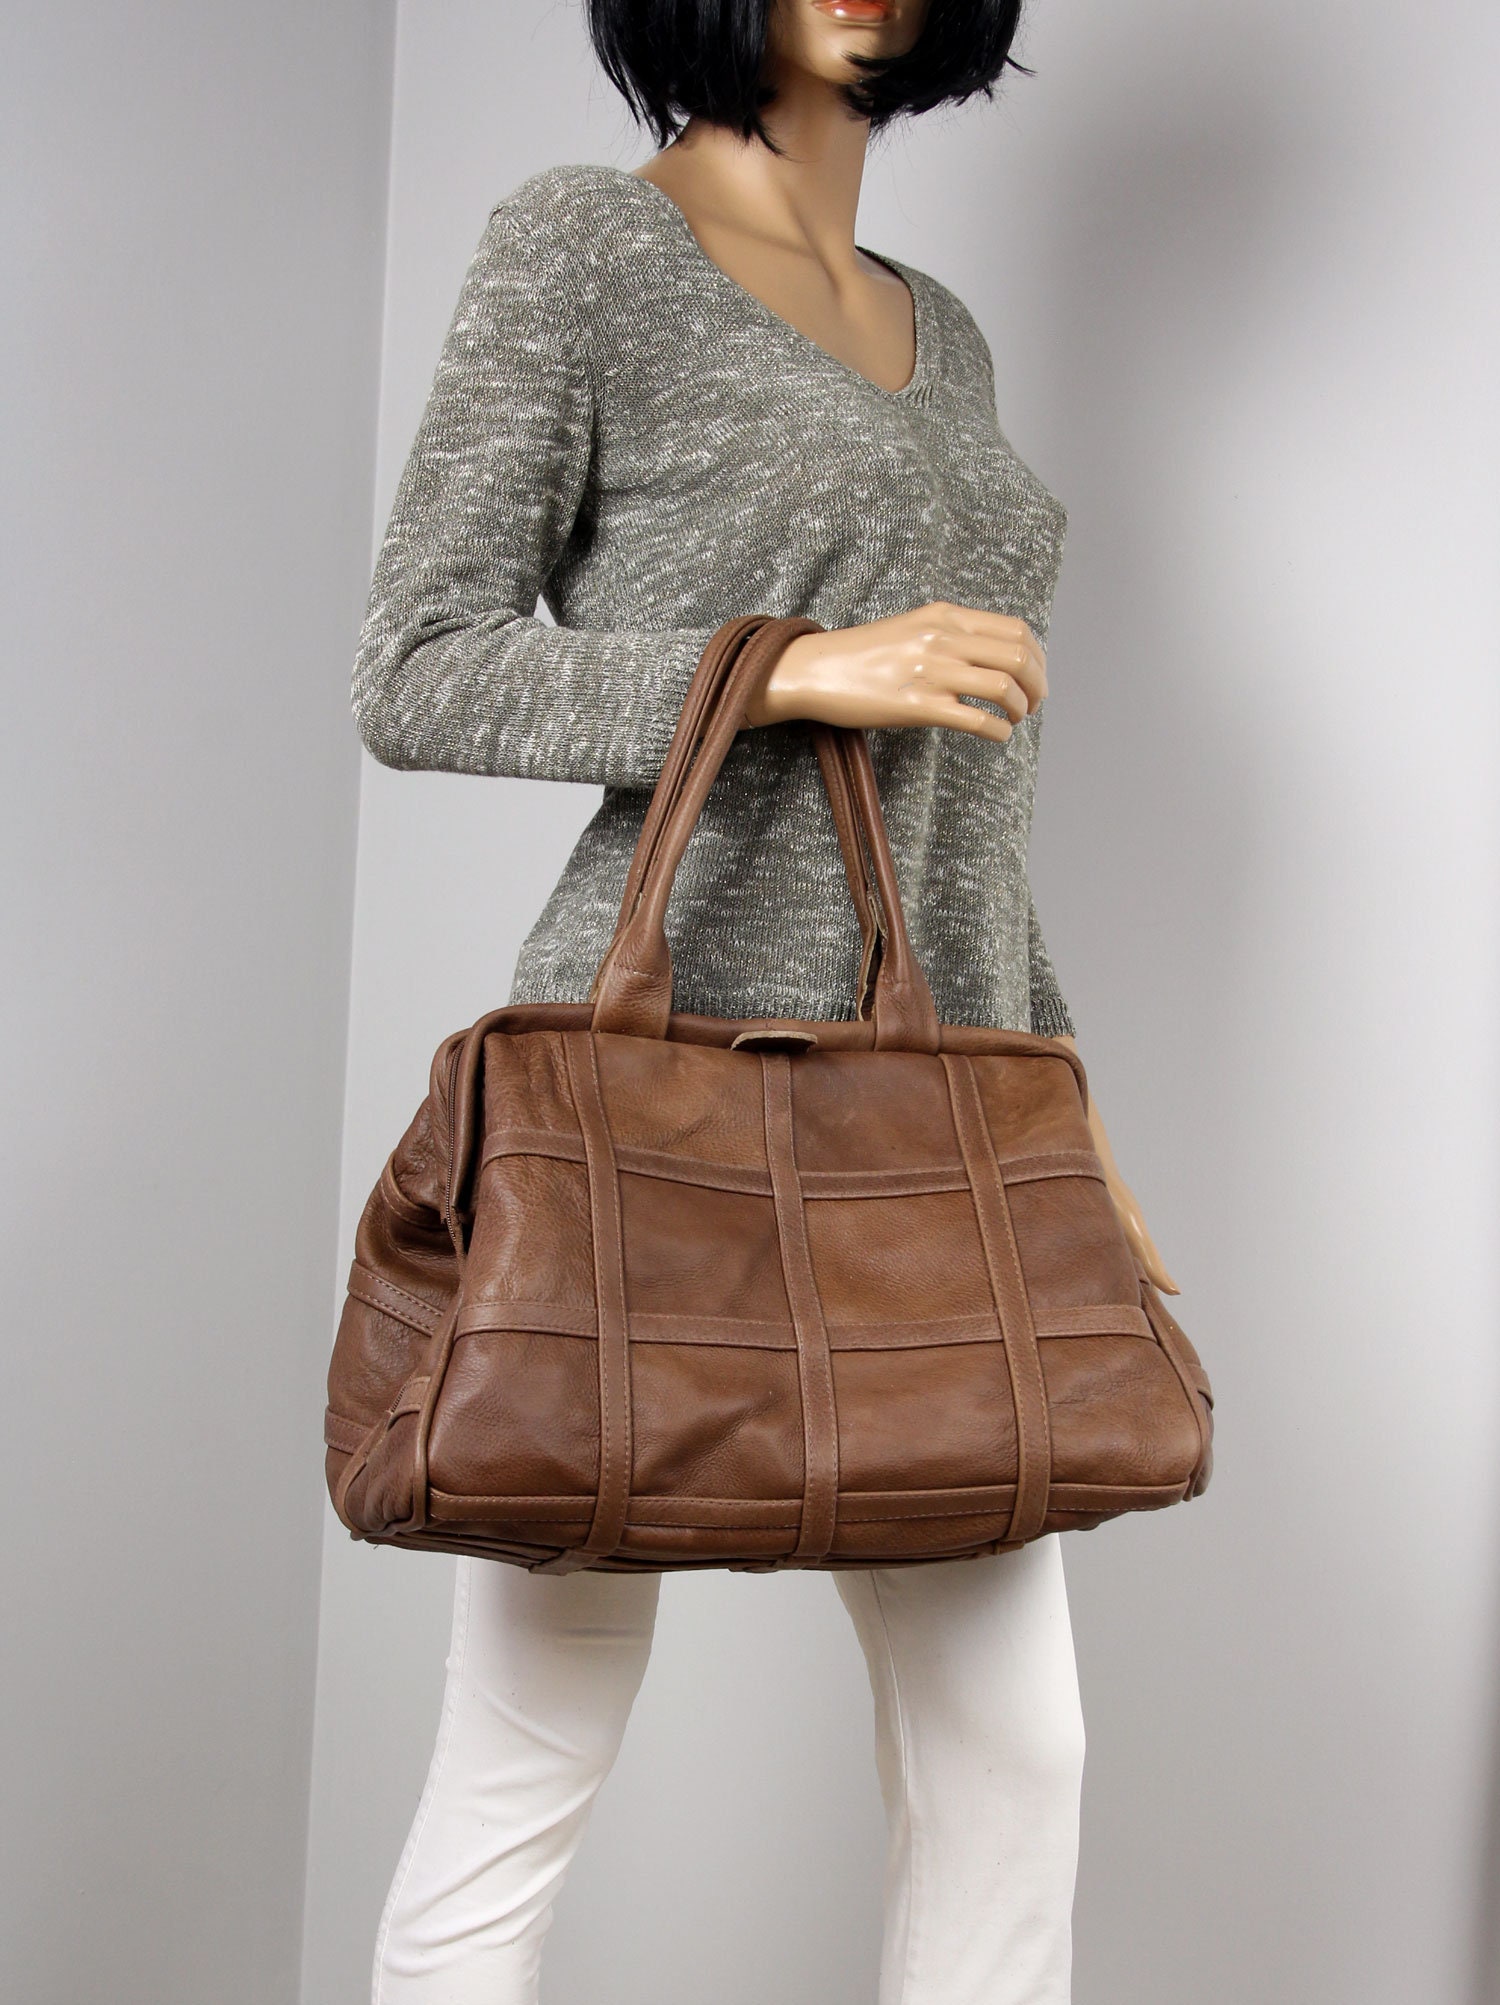 Brown Leather Duffel Bag Weekender Bag Leather Travel Bag - Etsy